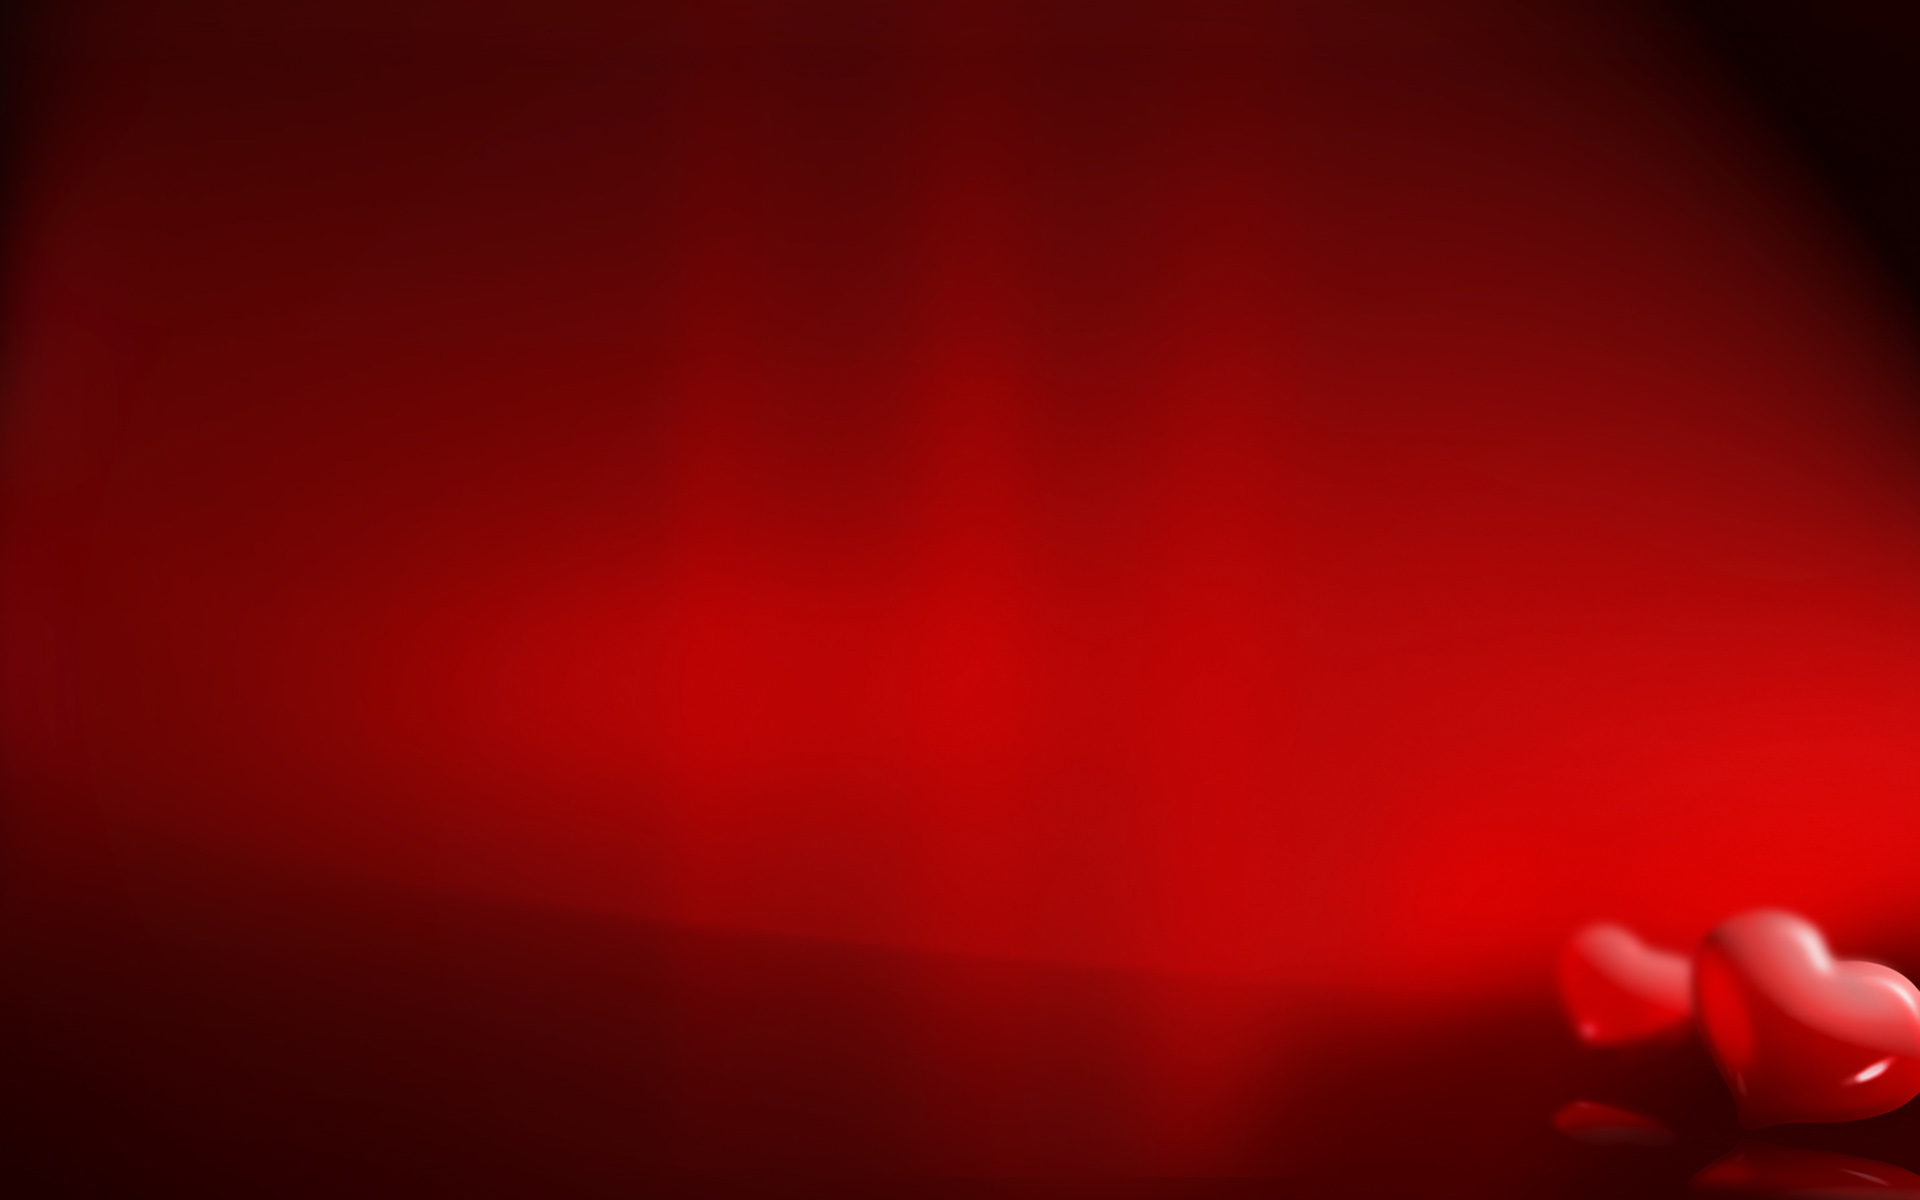 Background Red Wallpaper Photo For Desktop